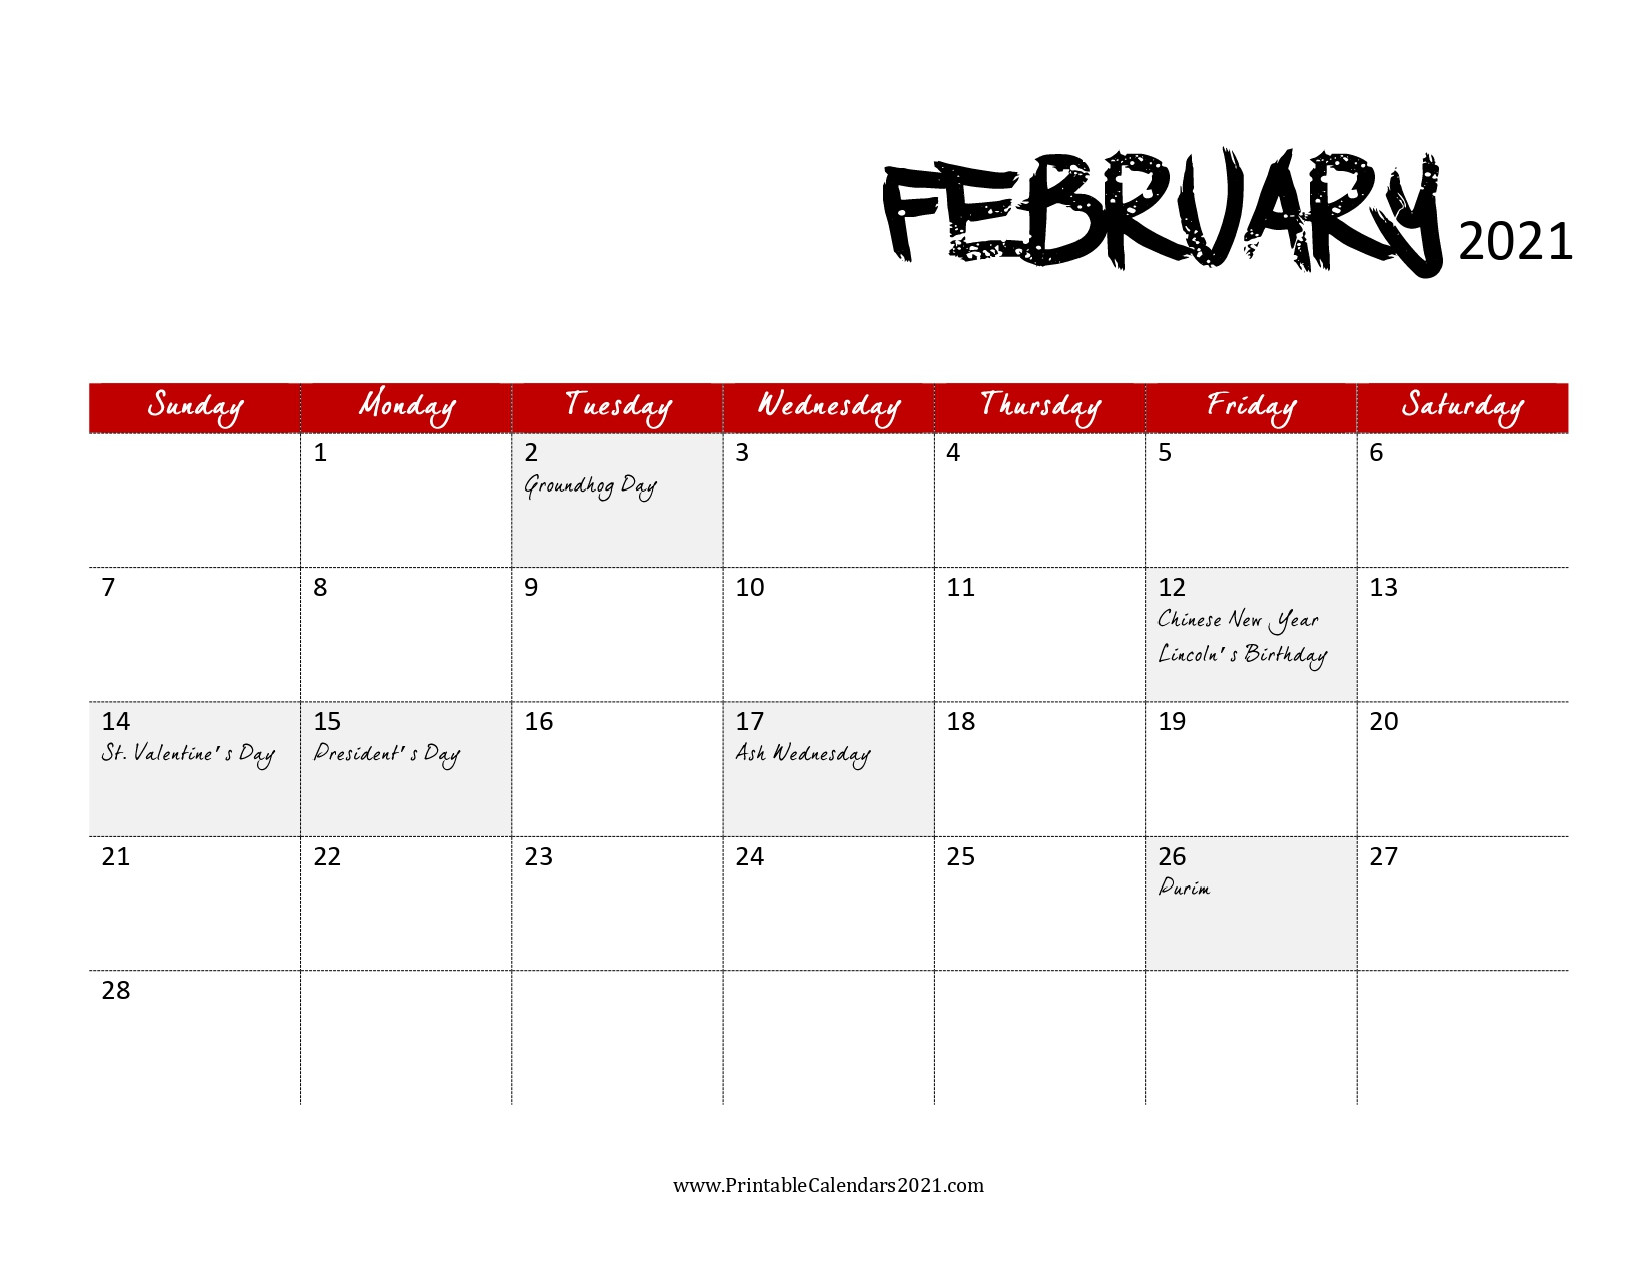 65+ Free February 2022 Calendar Printable With Holidays-Printable Calendar February 2021 Pdf